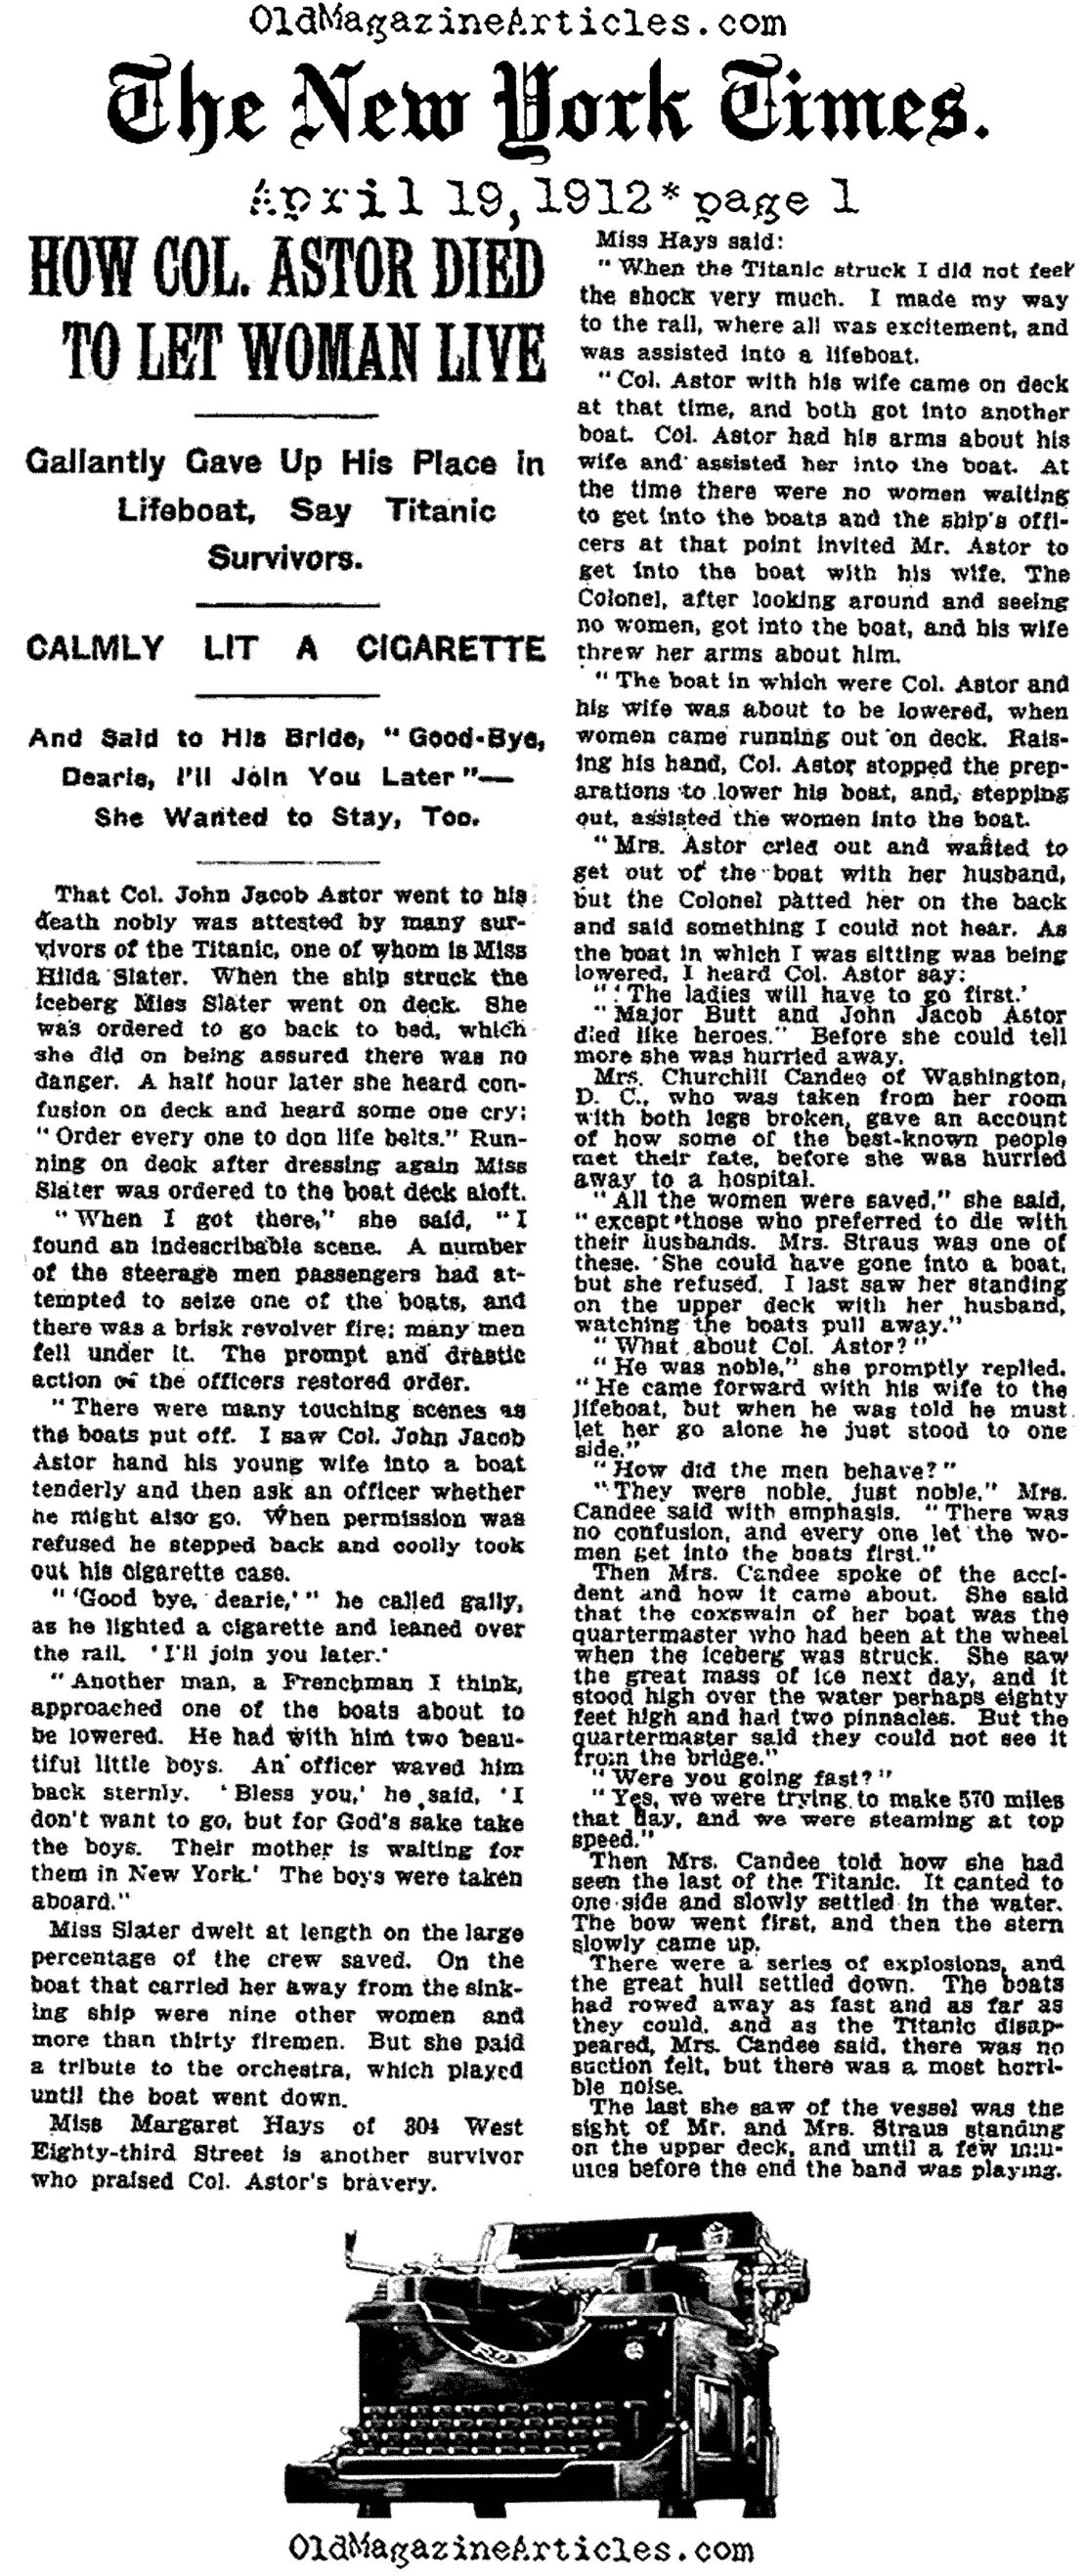 How John Jacob Astor Died (New York Times, 1912)